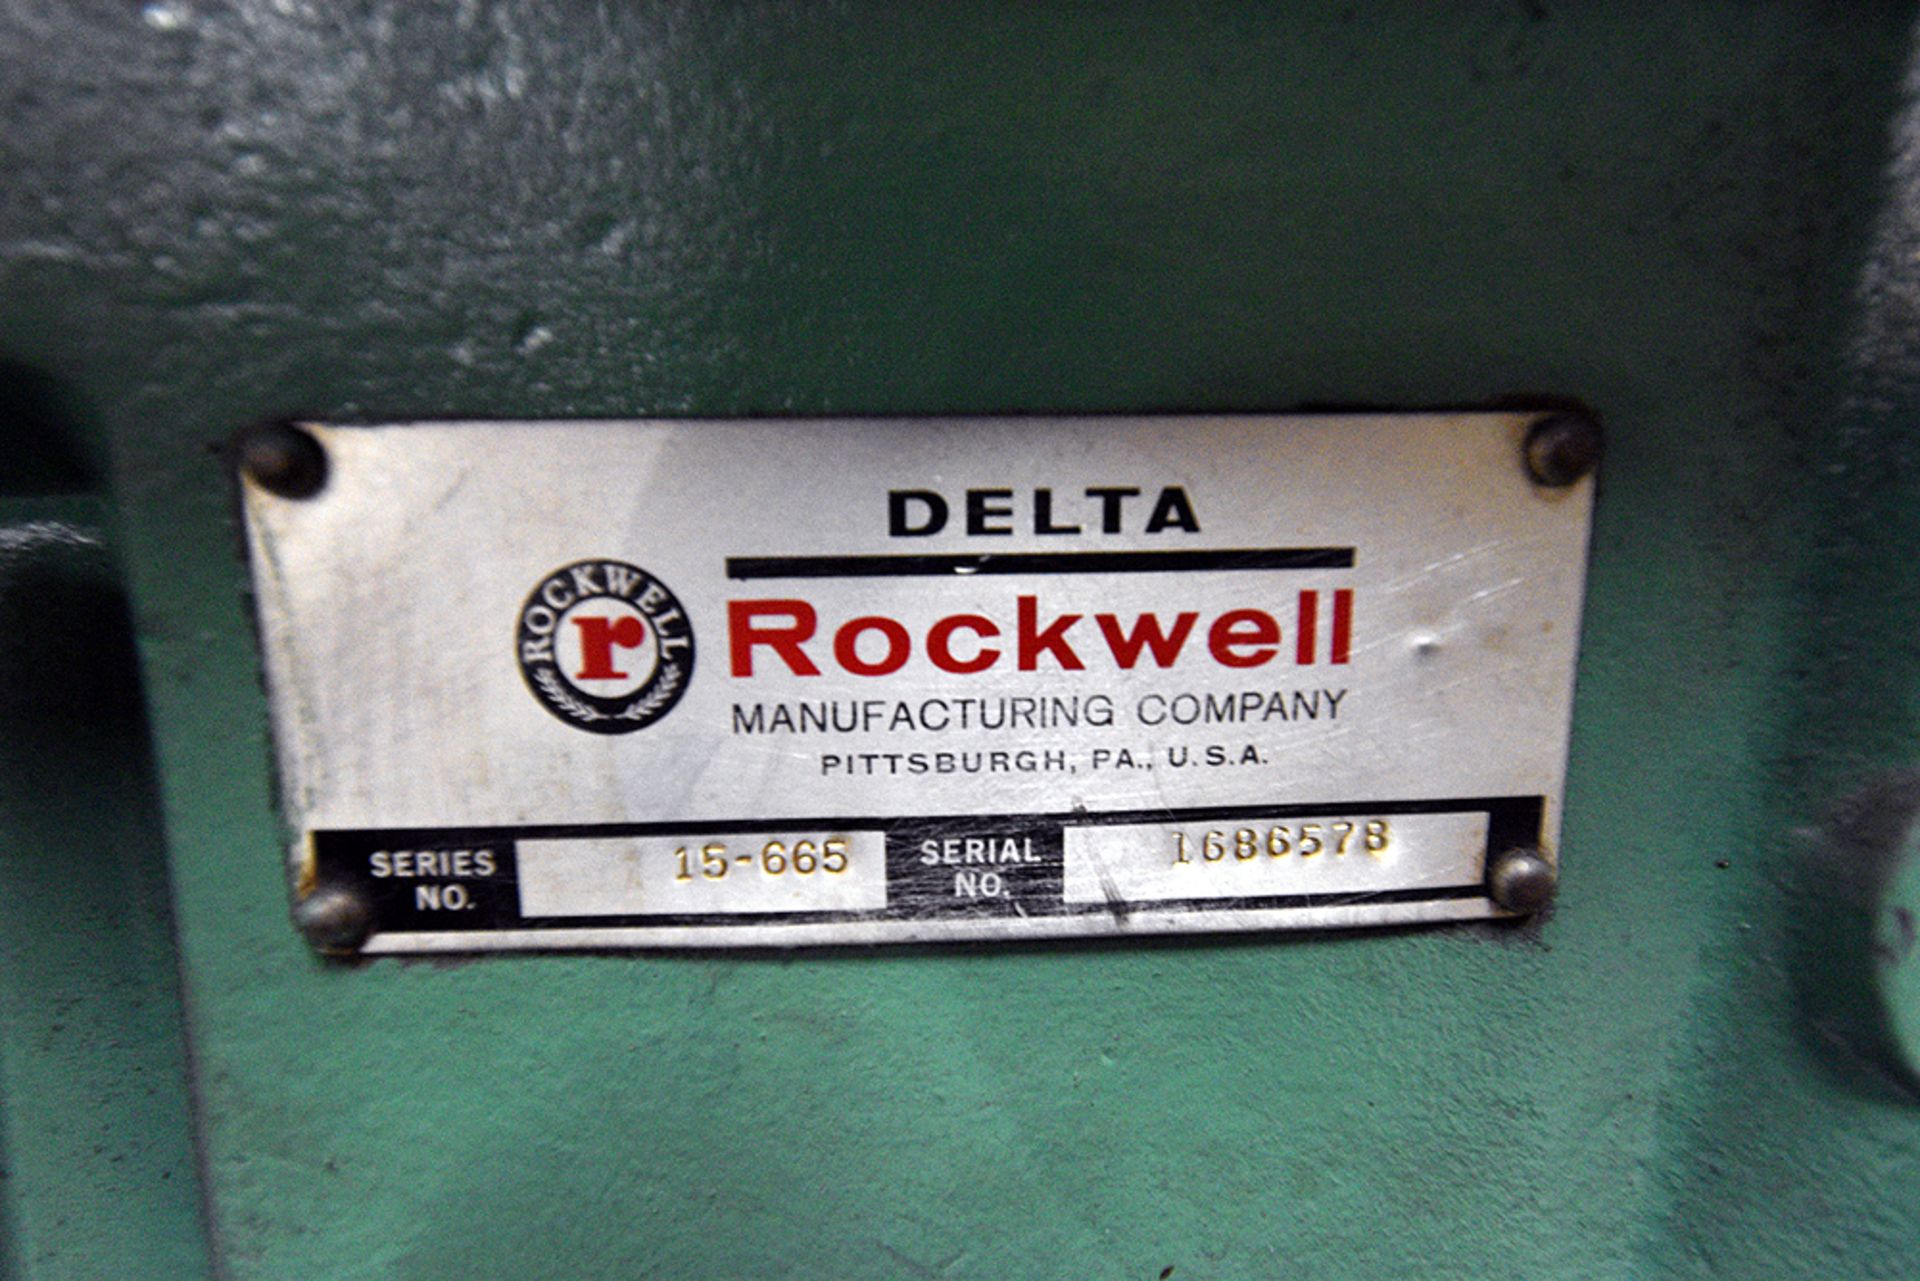 Delta-Rockwell Vertical Single Pedestal Drill Press, Model 15-665 s/n 1686578 - Image 4 of 4